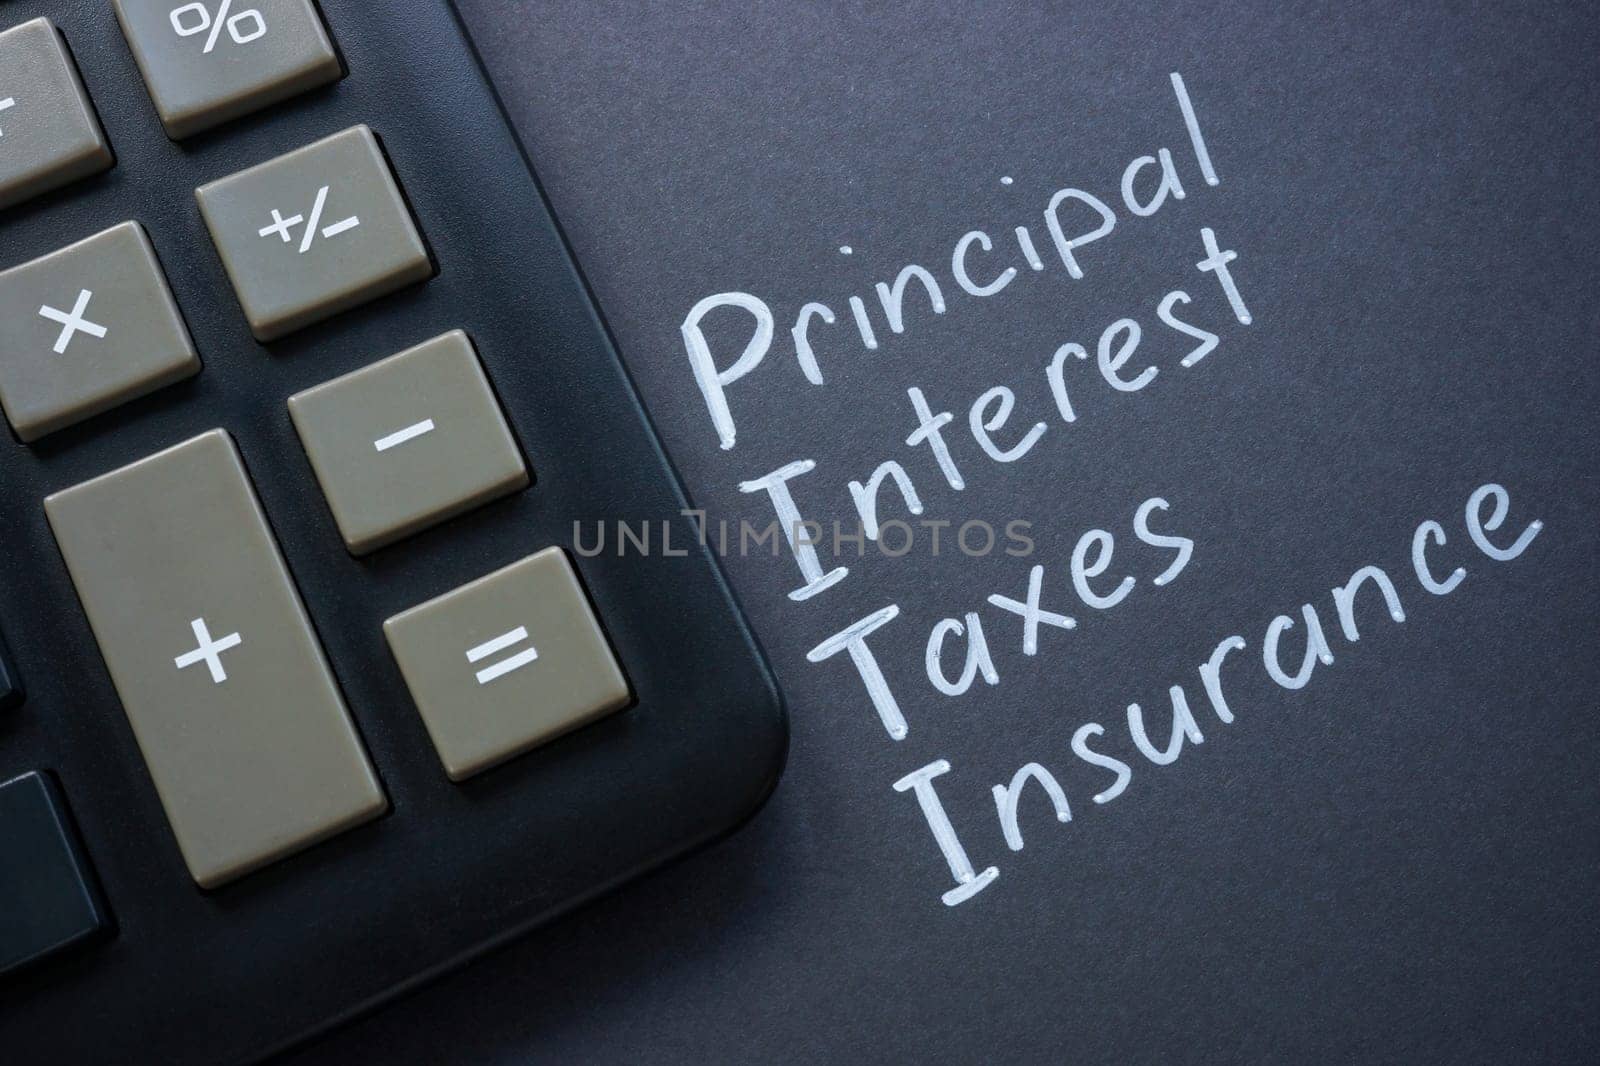 Dark calculator and abbreviation PITI Principal interest taxes insurance.